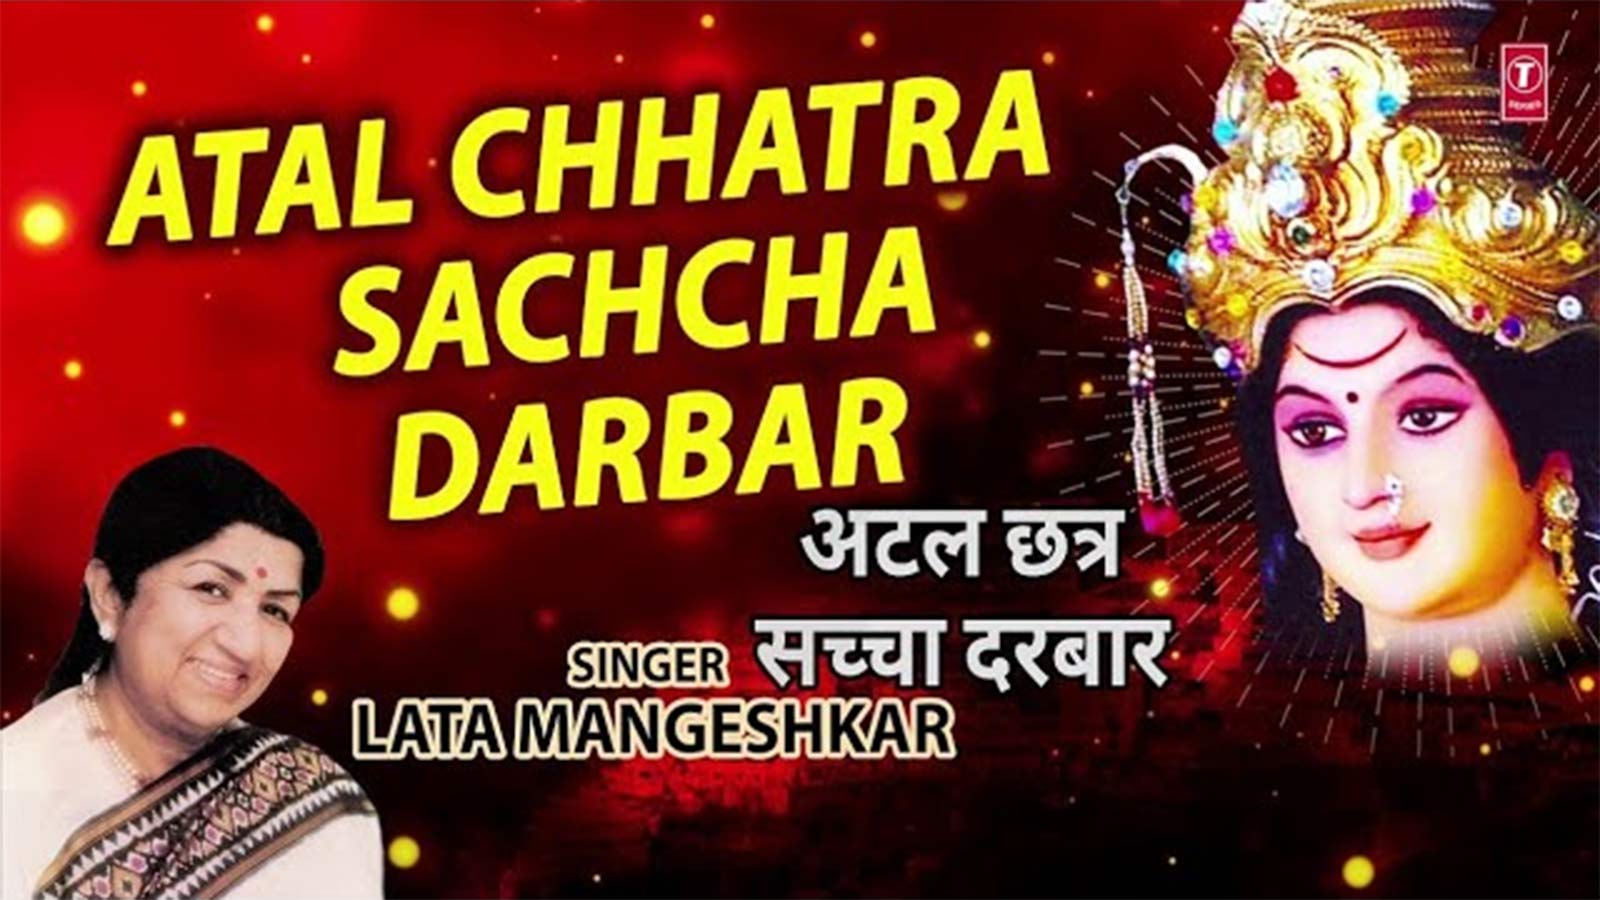 Watch Popular Hindi Devotional Video Song 'Atal Chhatra Sachcha Darbar'  Sung By Lata Mangeshkar. Popular Hindi Devotional Songs | Lata Mangeshkar  Songs | Hindi Bhakti Songs, Devotional Songs, Bhajans, Meditations and Pooja